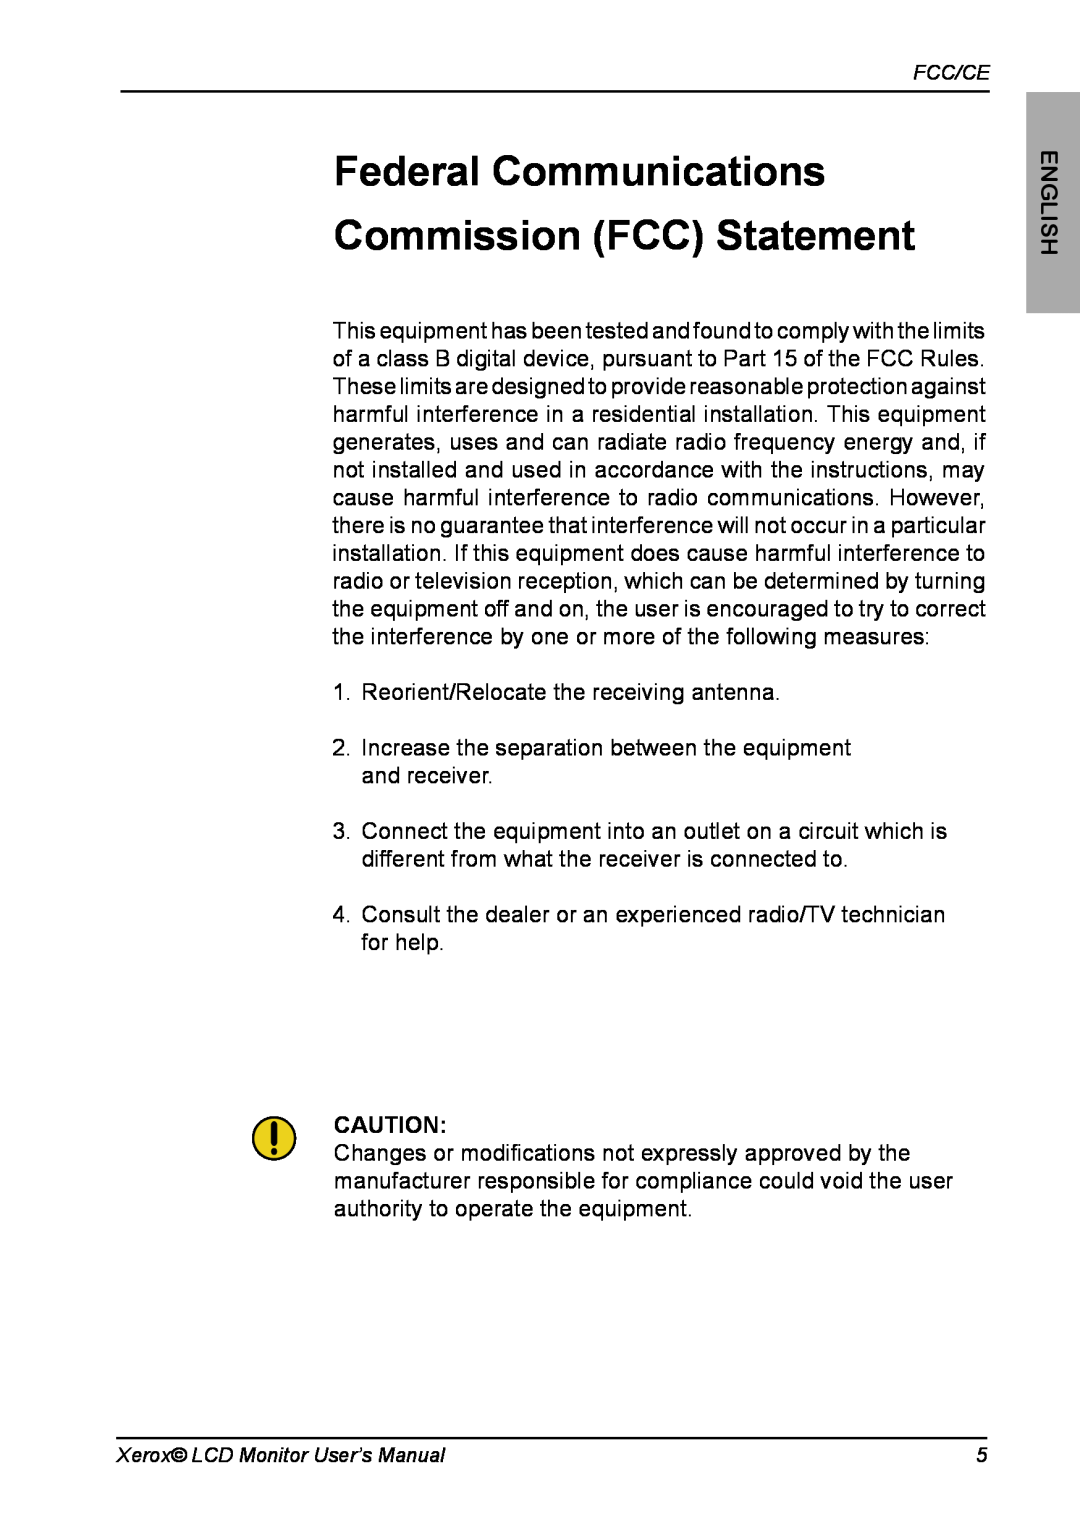 Xerox XM7-19w manual Federal Communications Commission FCC Statement, English 